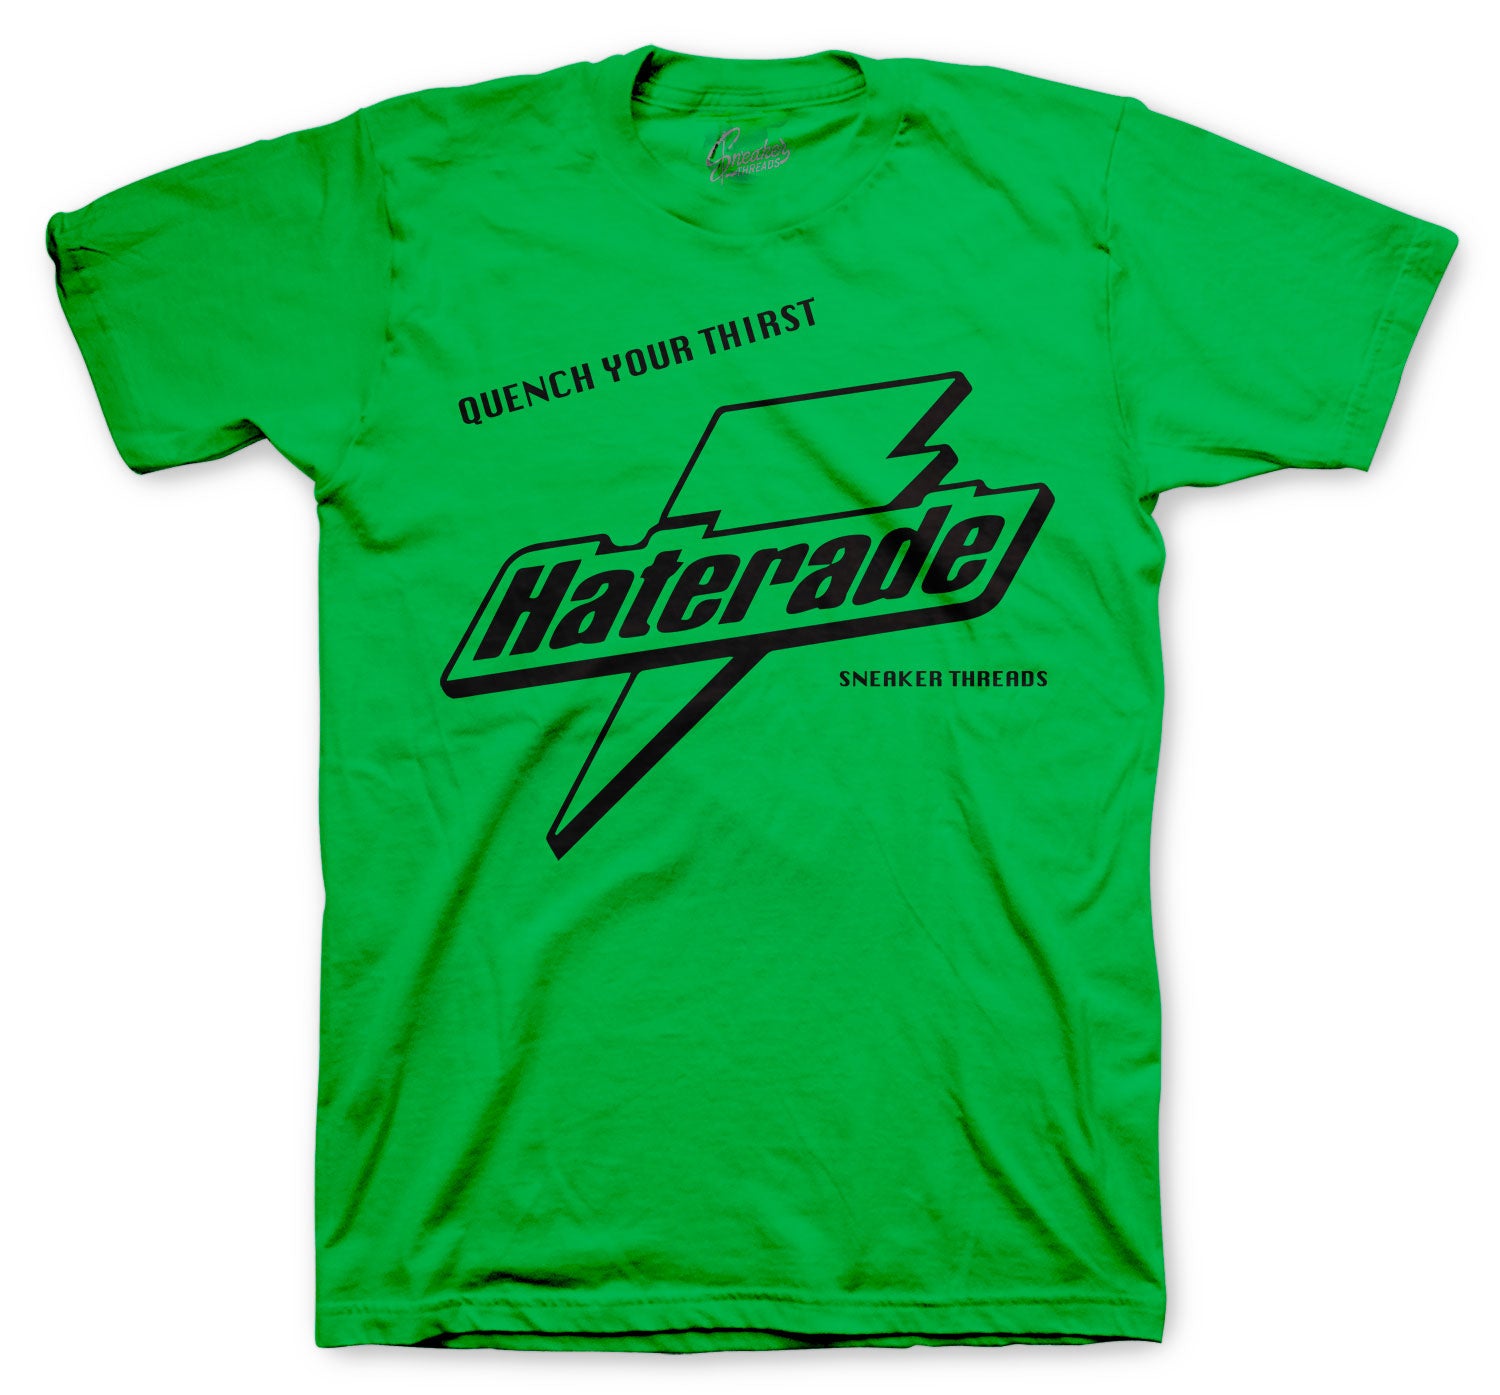 Retro 5 Oregon Shirt - Haterade - Green